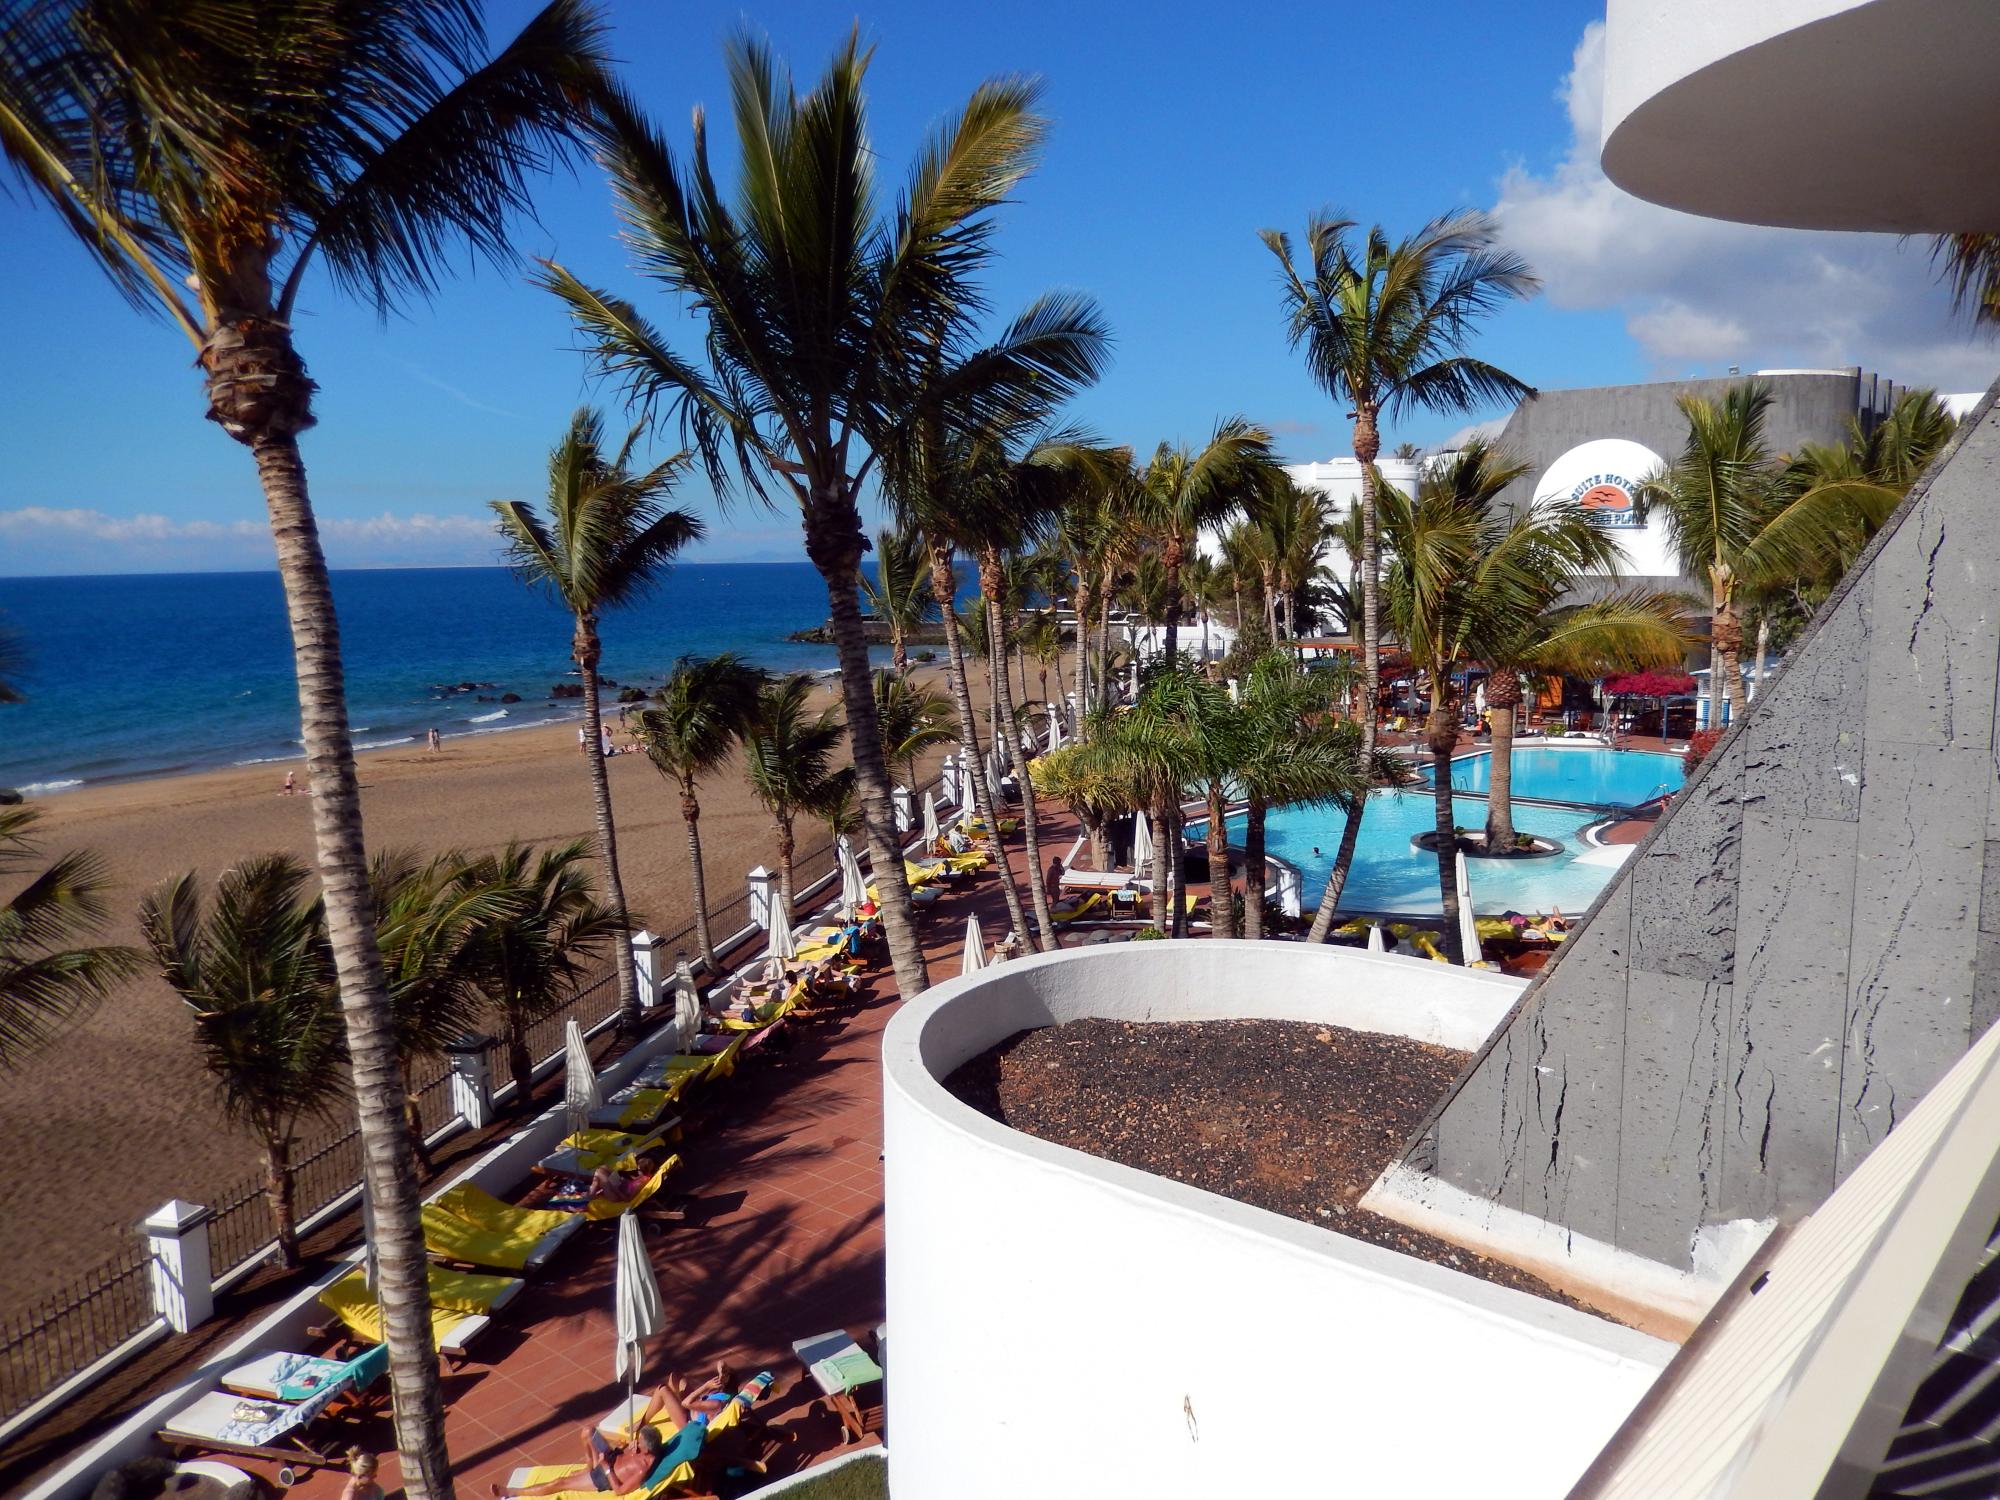  Canary Islands - Hotel Fariones Playa #1